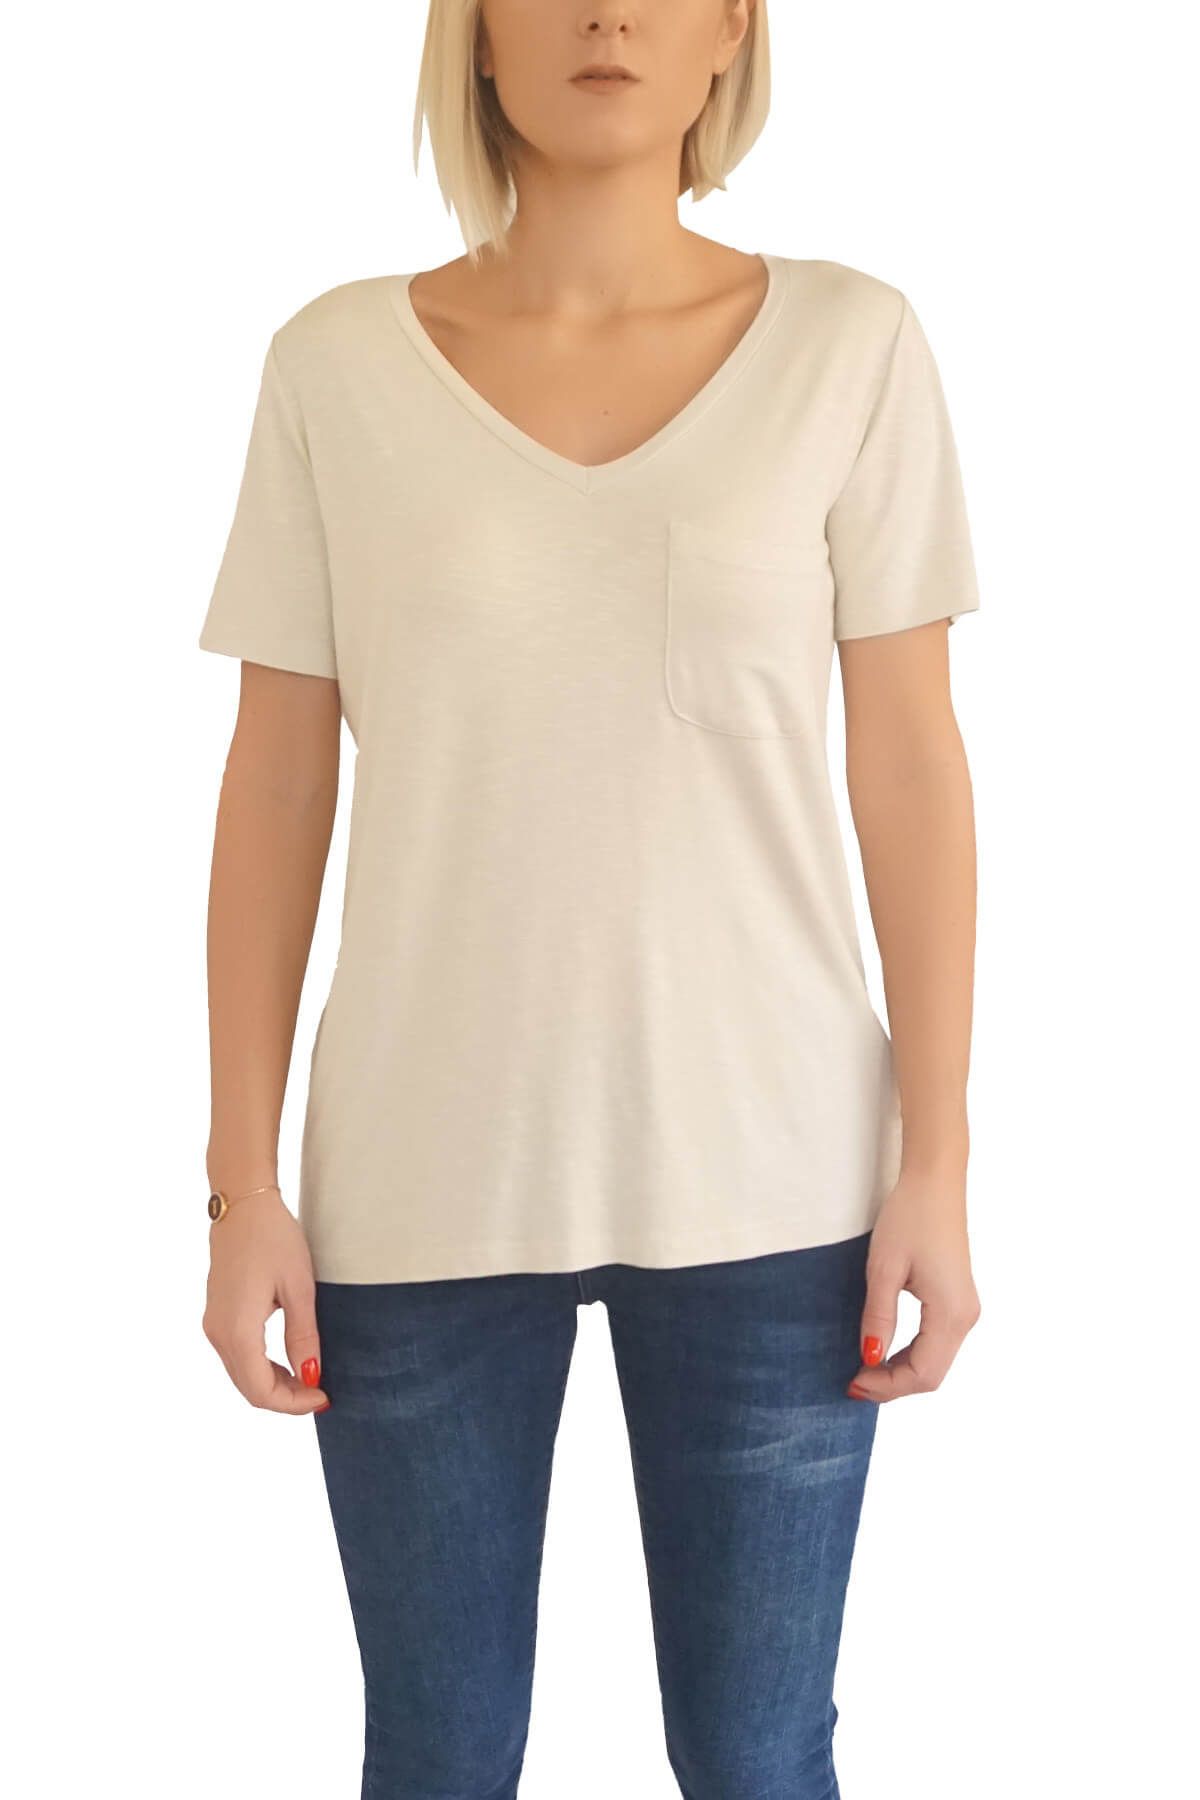 Mof Basics Kadın Taş T-Shirt VYCT-T